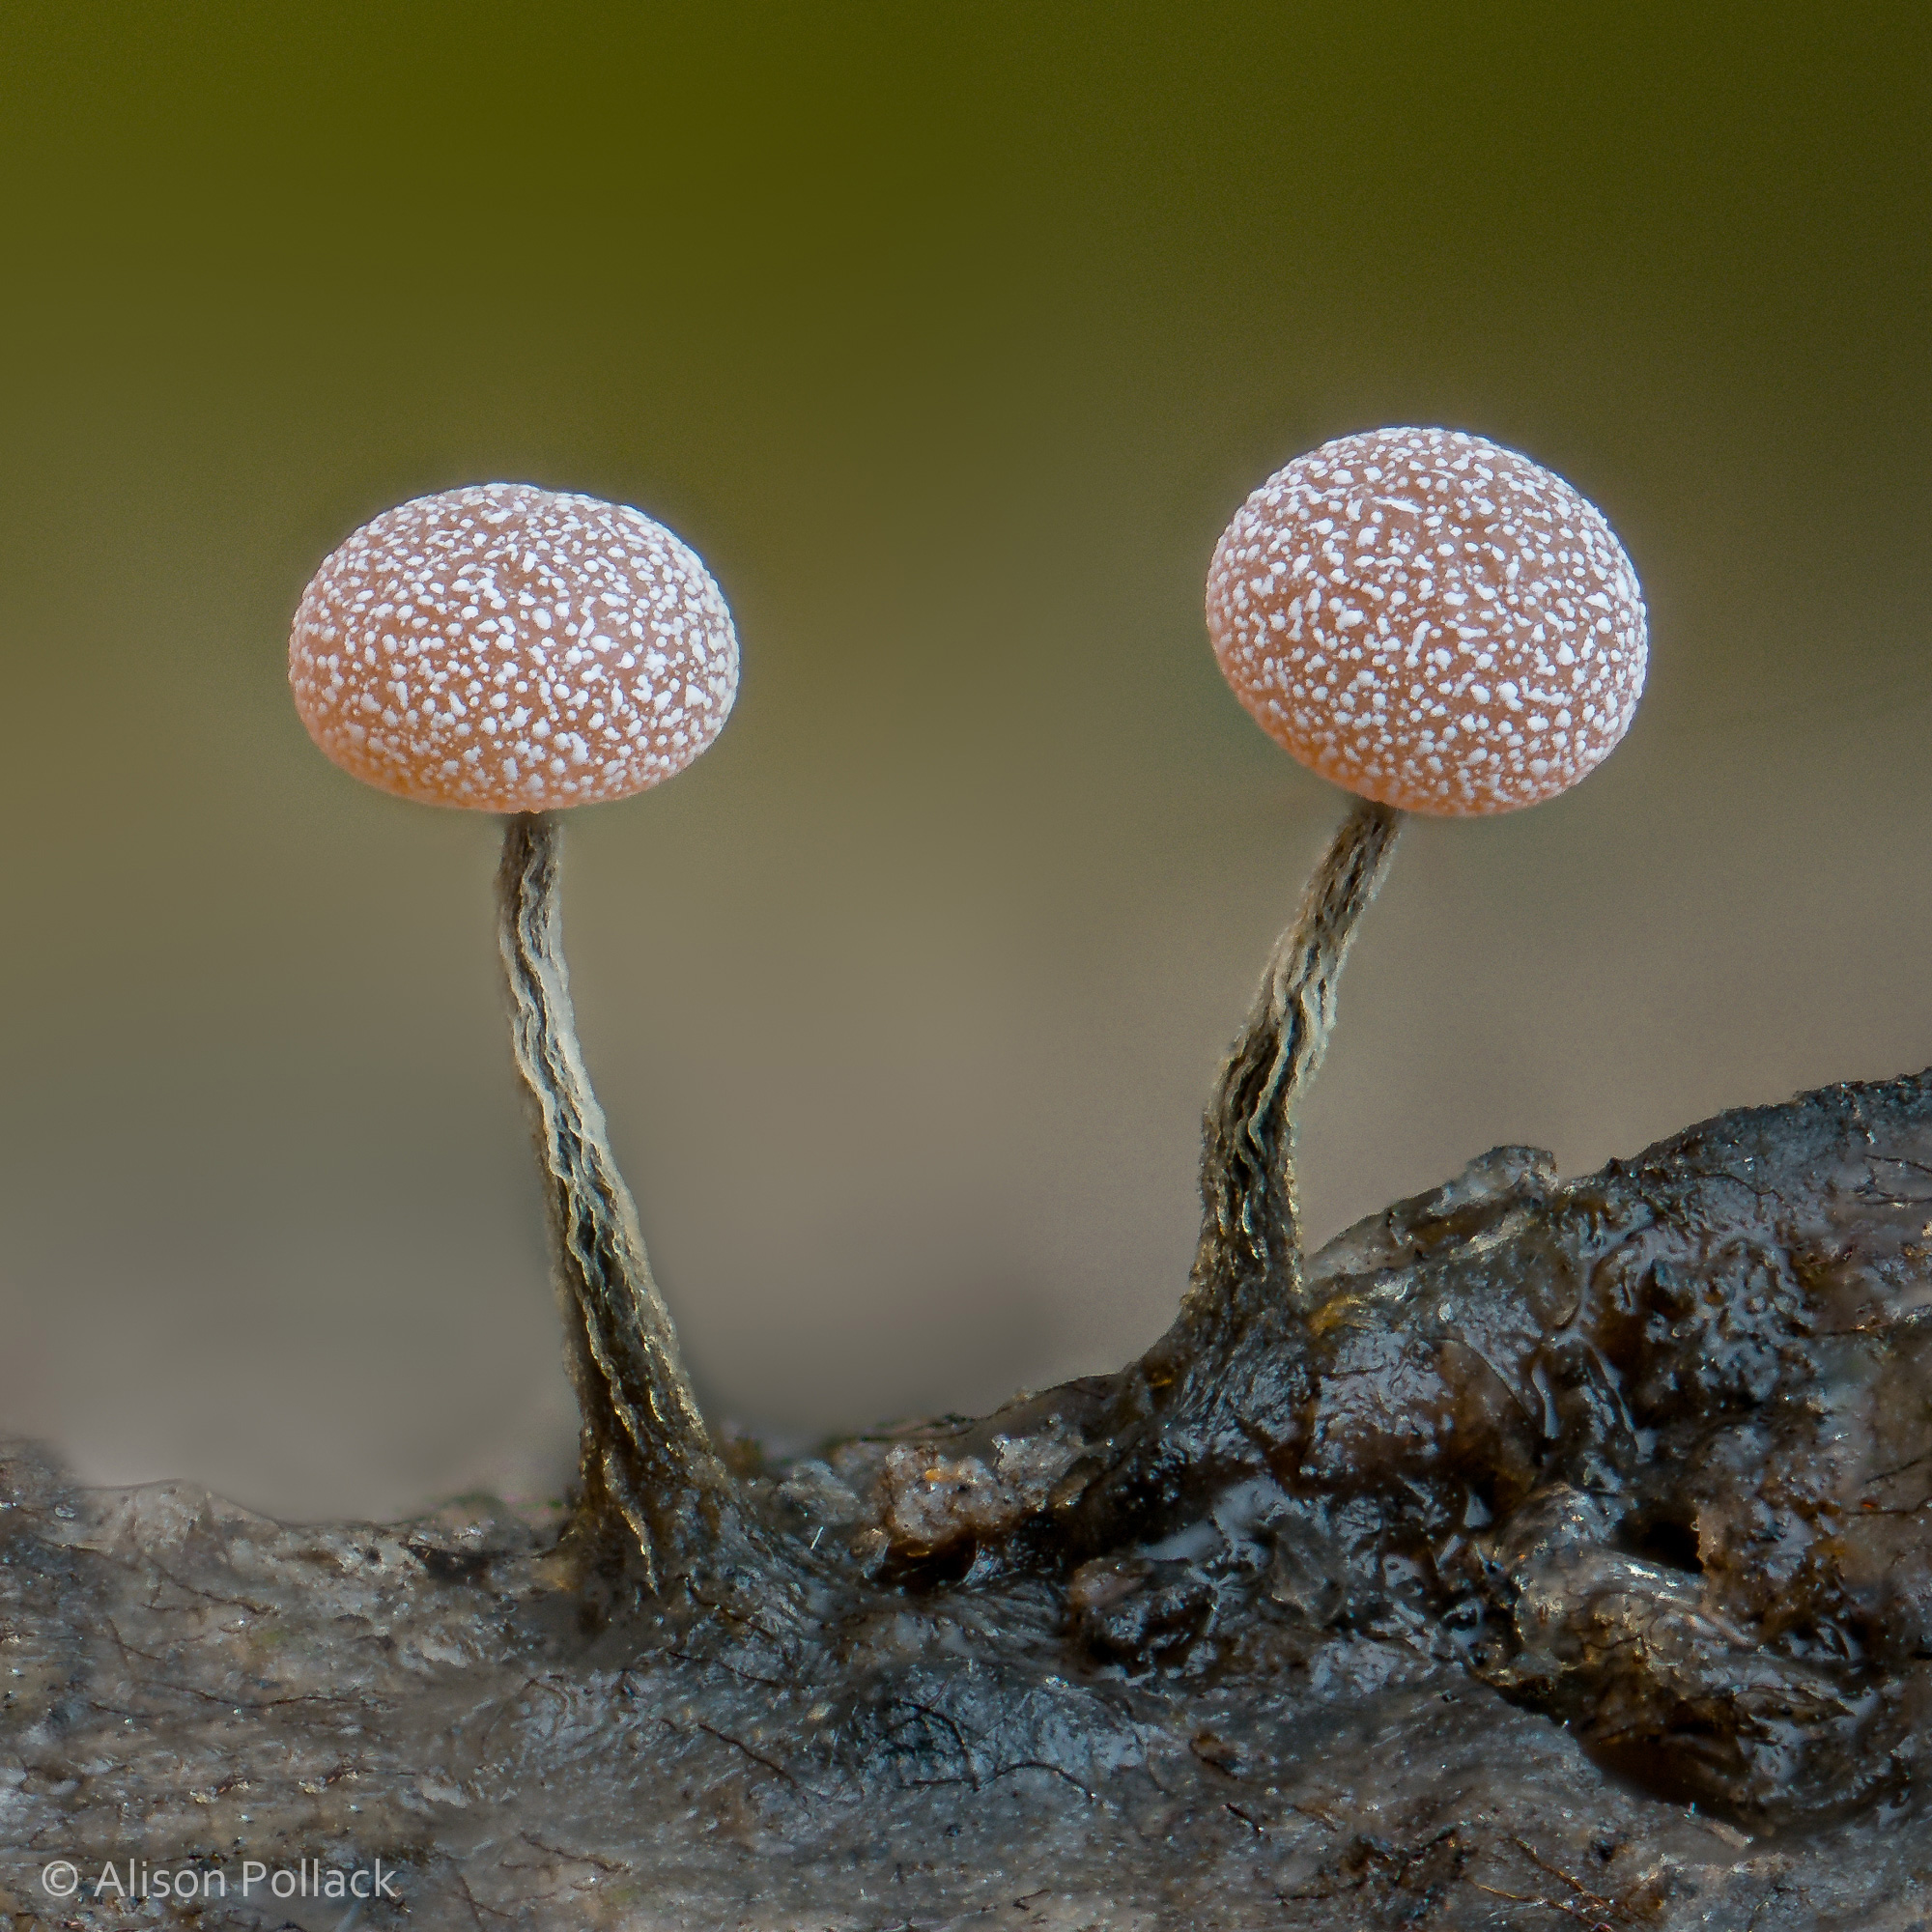 alisonpollack精彩的微距照片揭示了蘑菇的微观世界